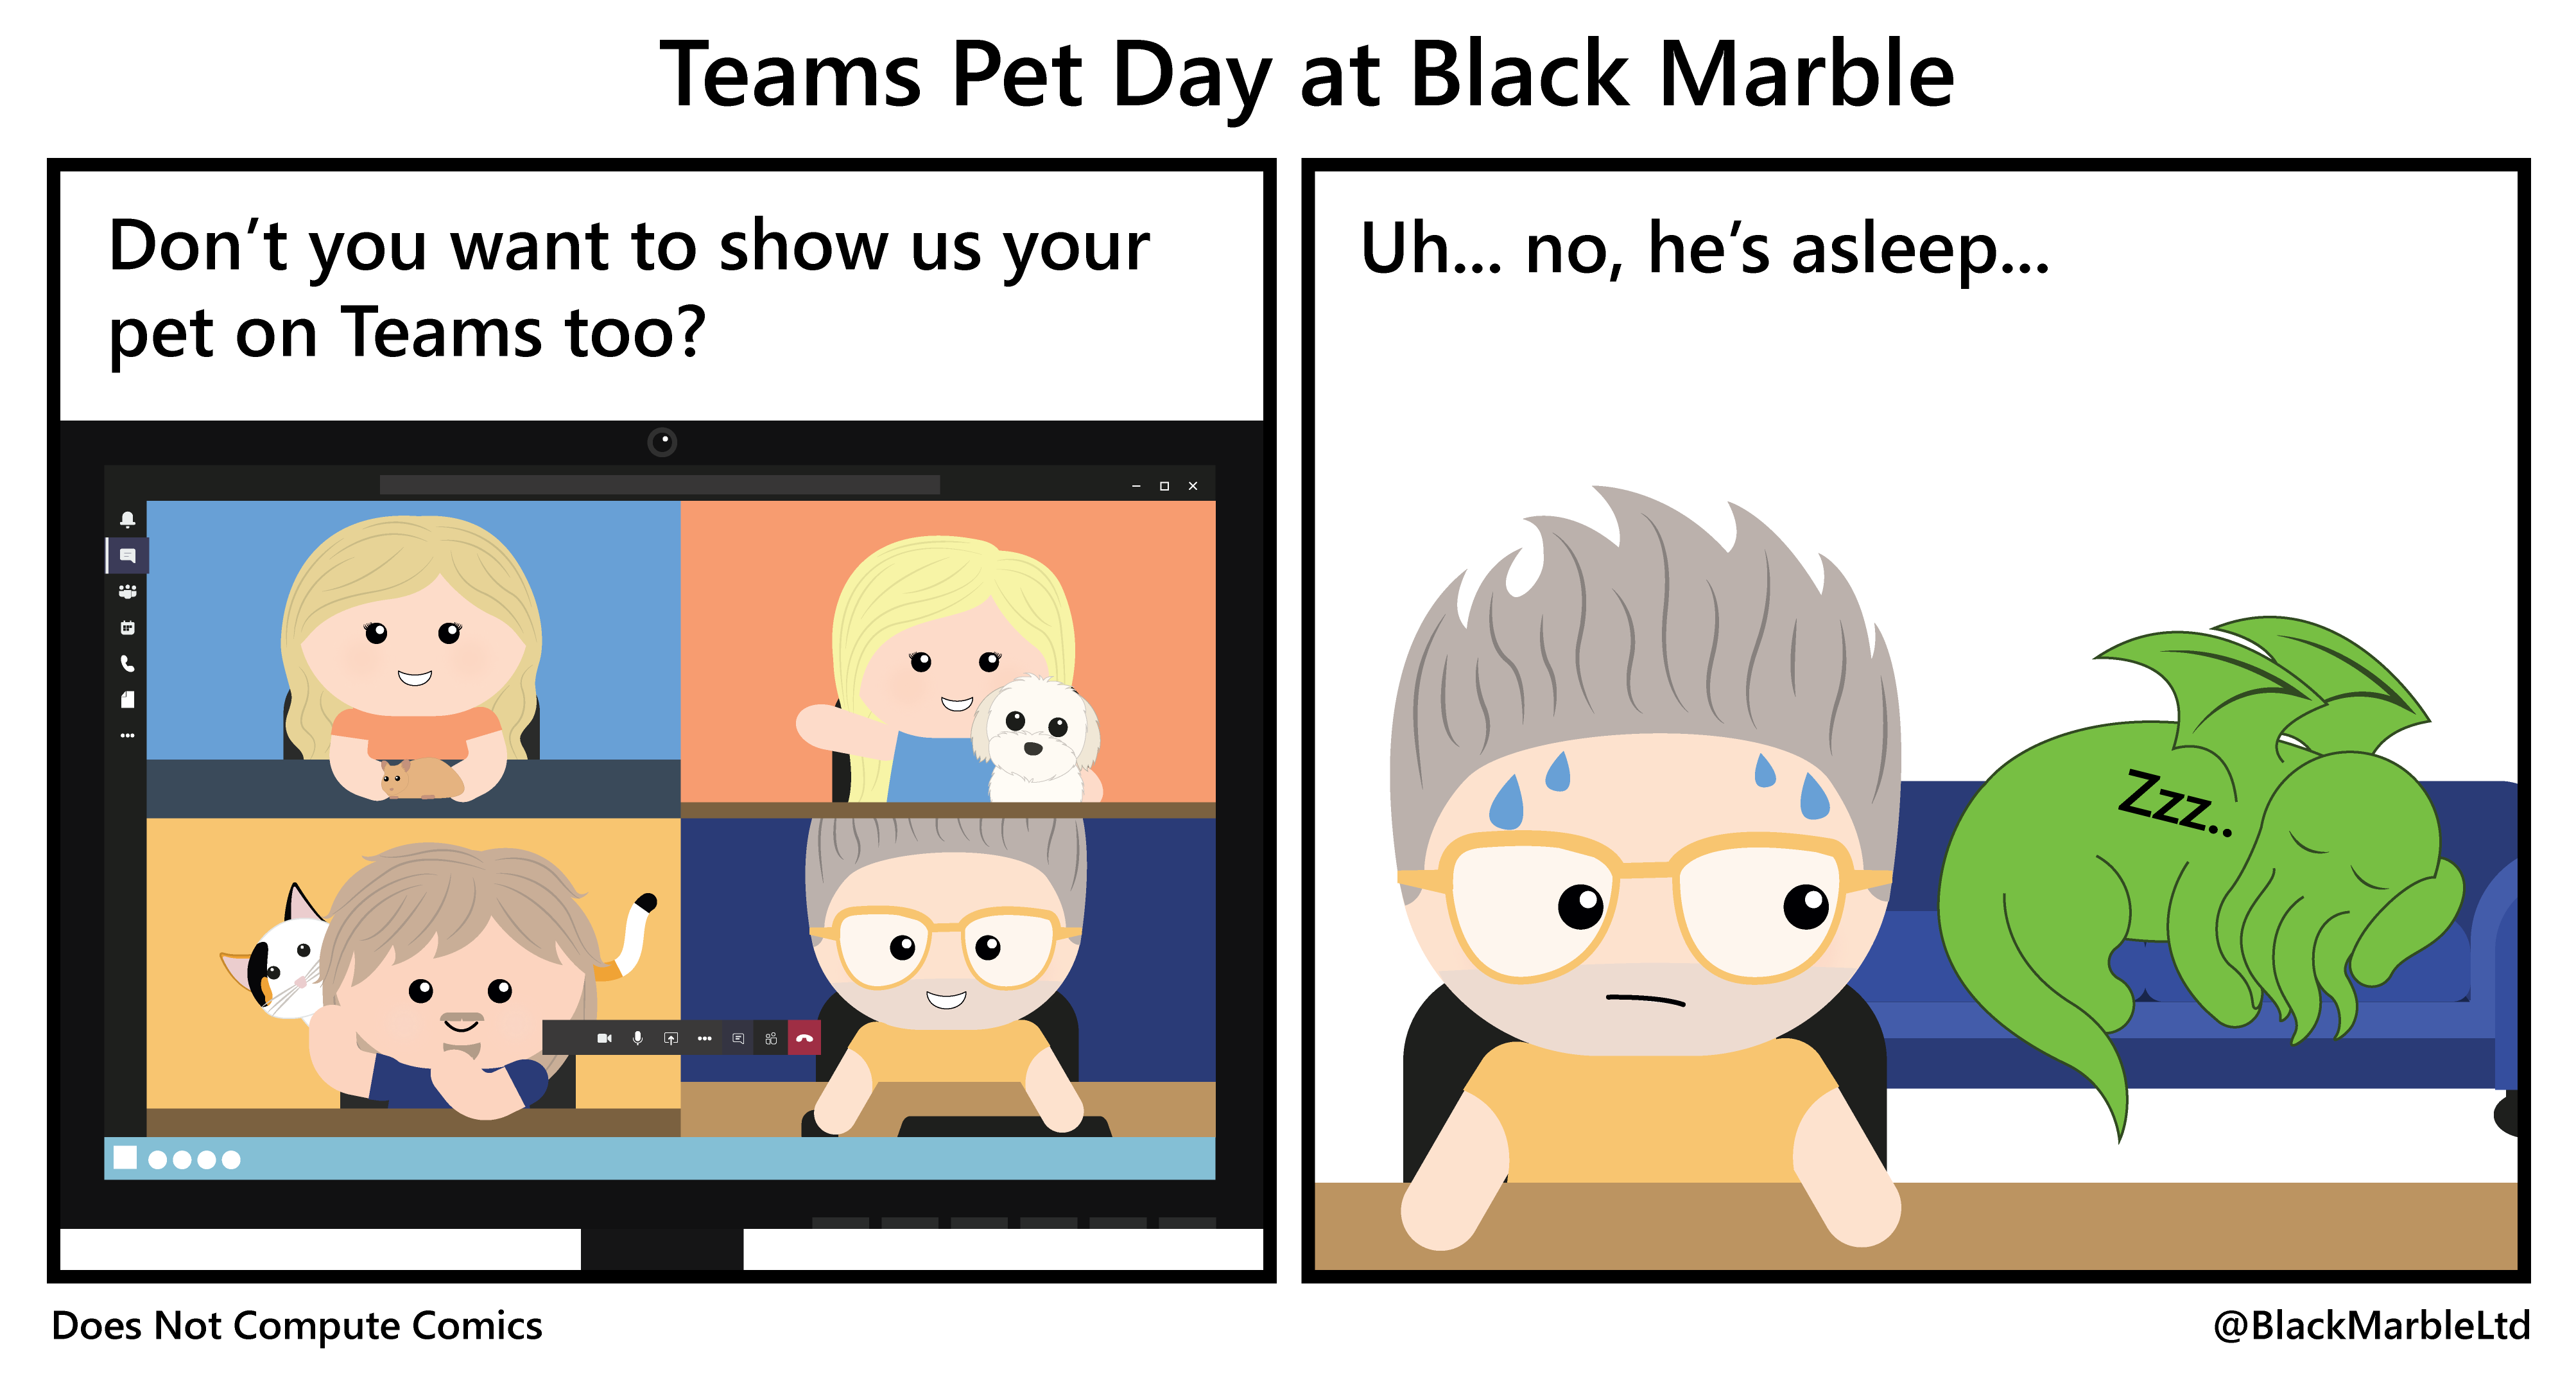 Teams Pet Day at Black Marble